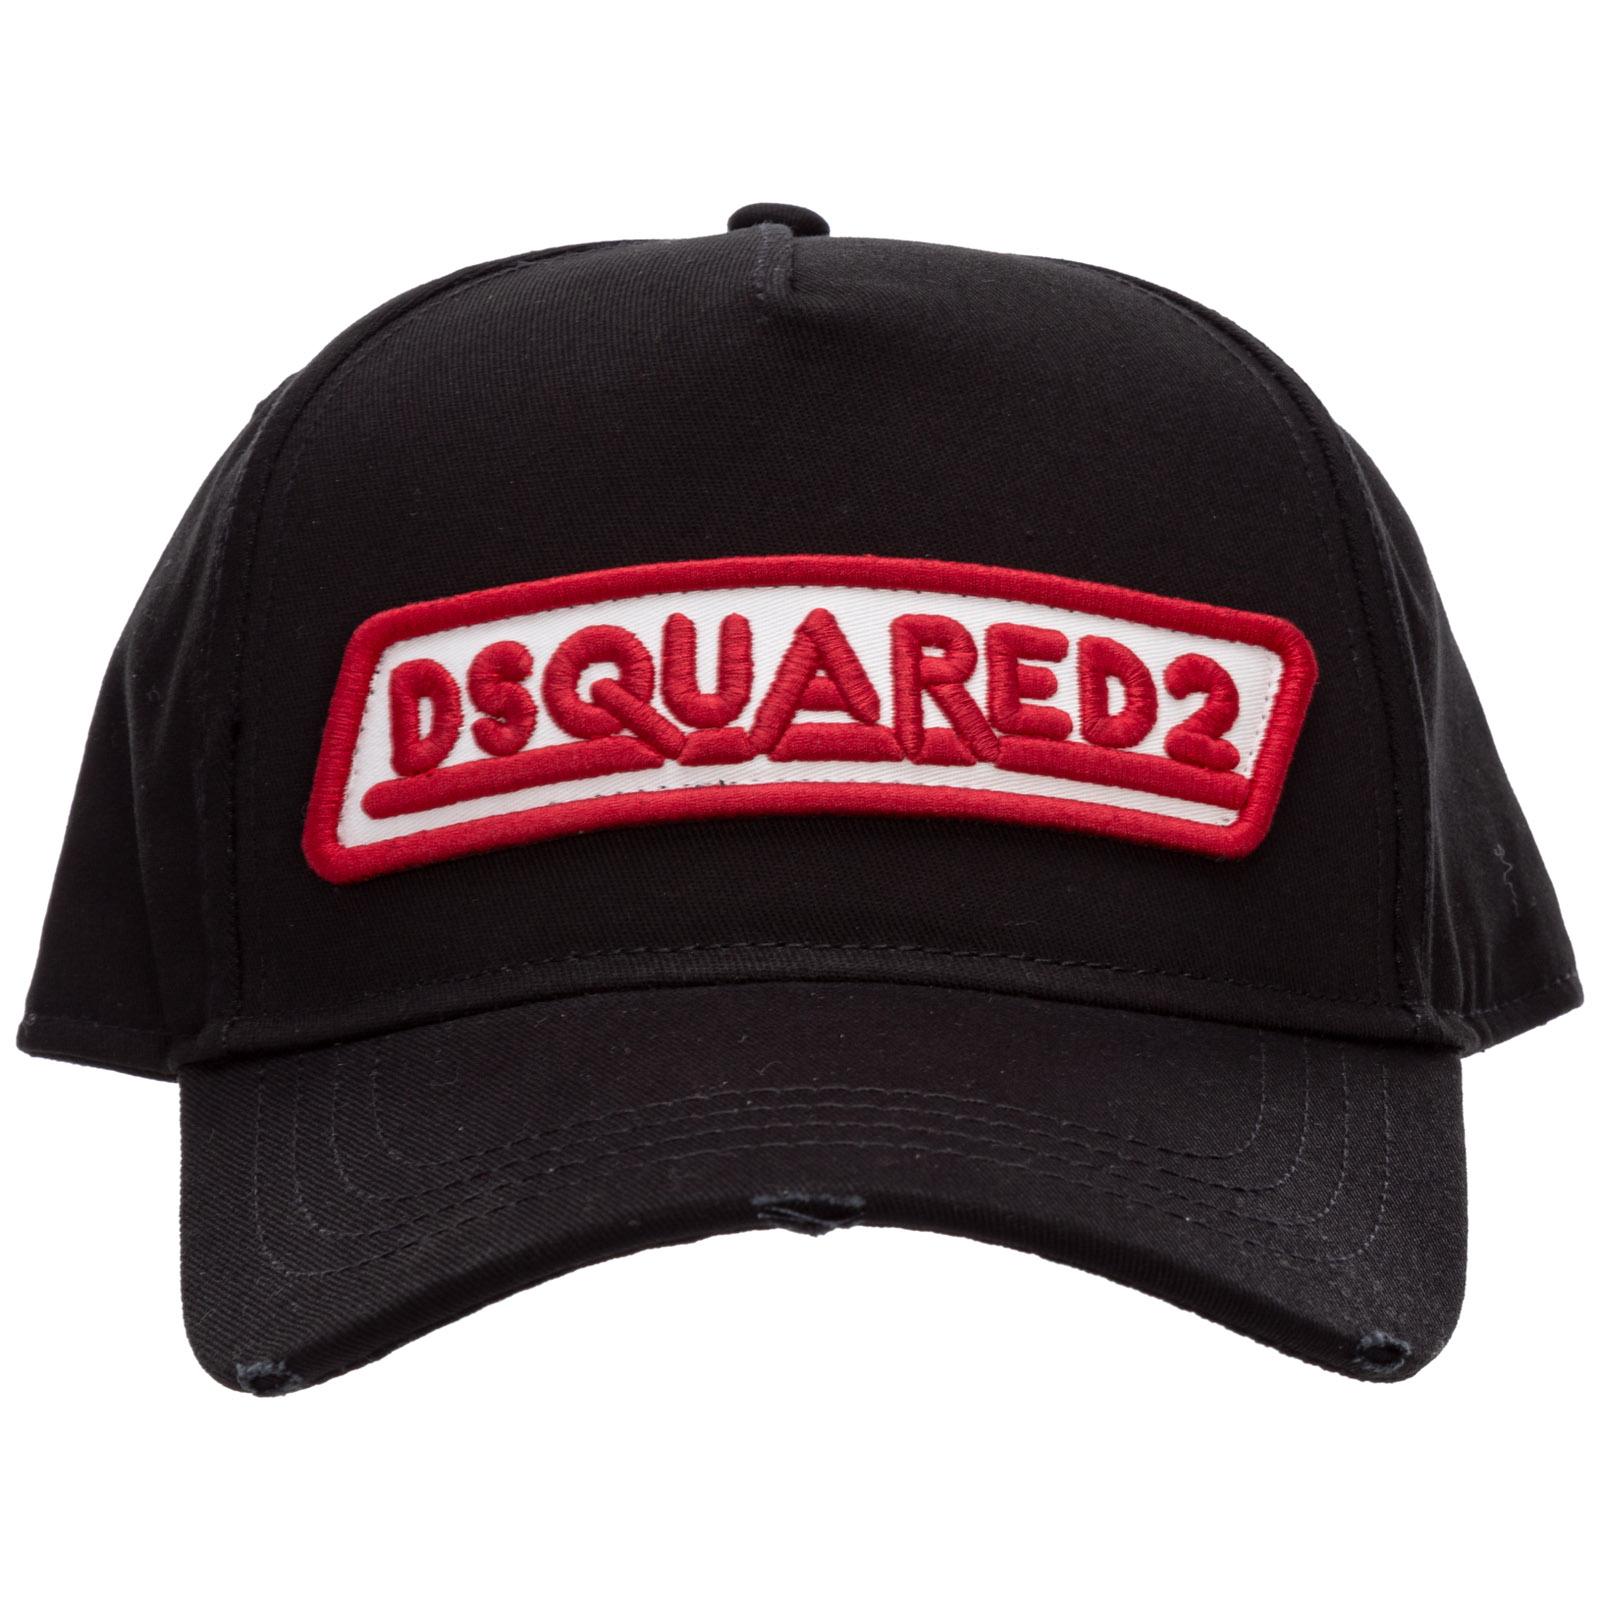 Dsquared2 adjustable mens cotton hat baseball cap black